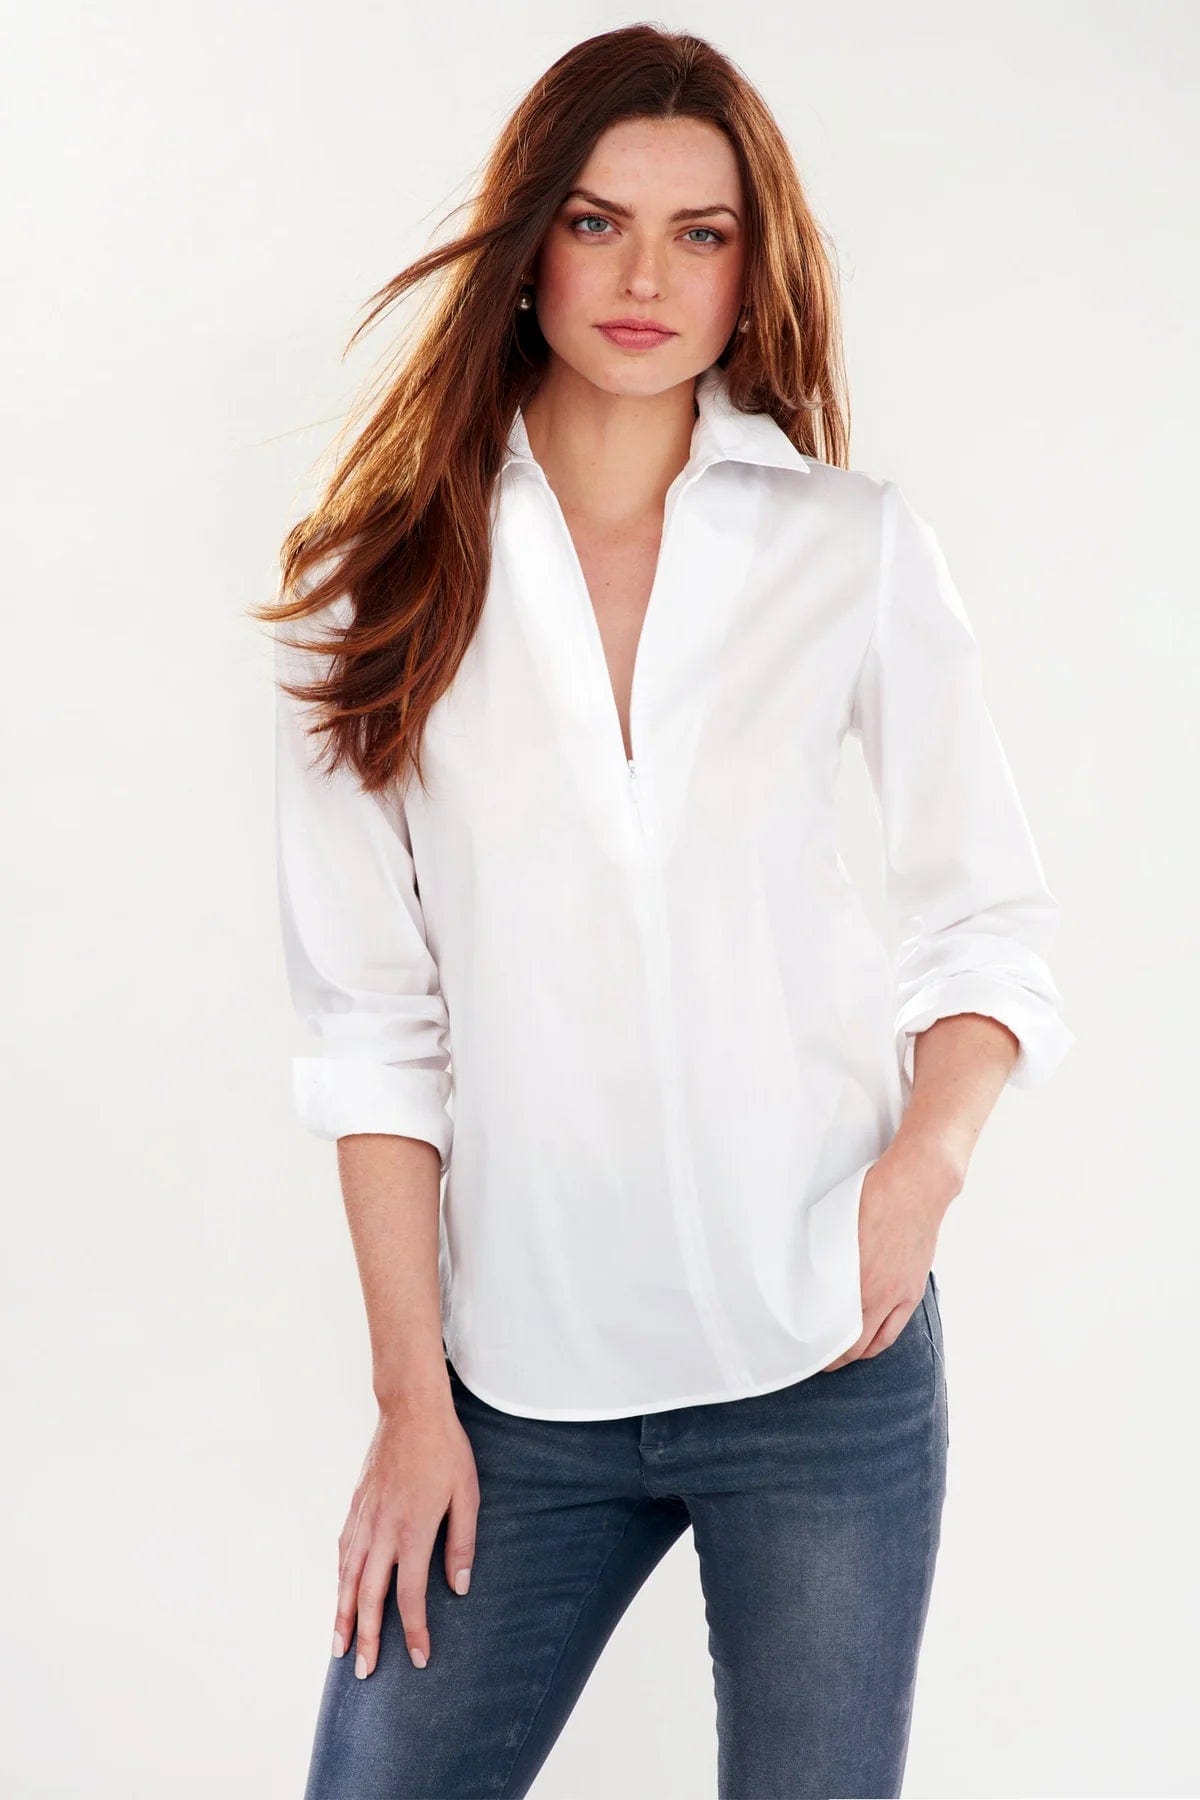 Finley Shirts Women's Shirts & Tops White / Extra Small Endora Long Sleeve Half Zip Top